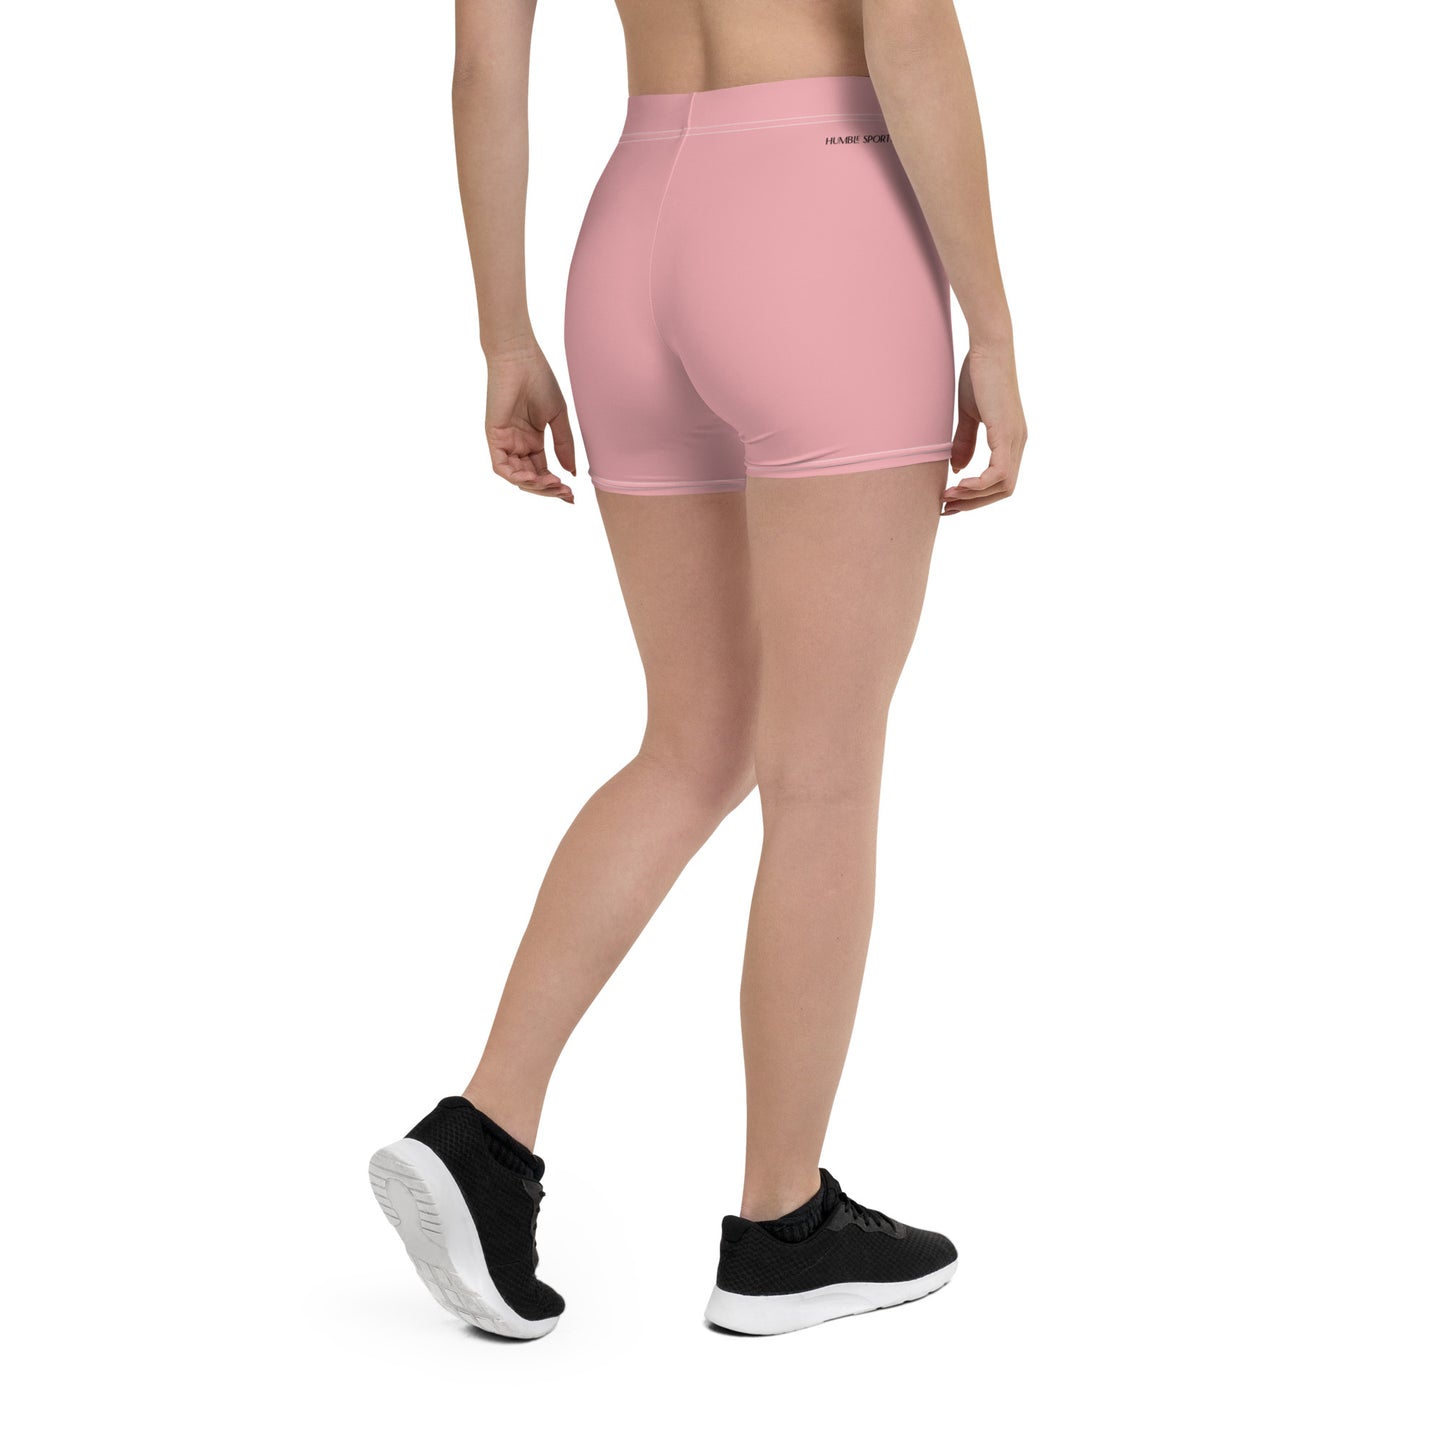 Humble Sportswear, women's Color Match powder pink activewear bike shorts 